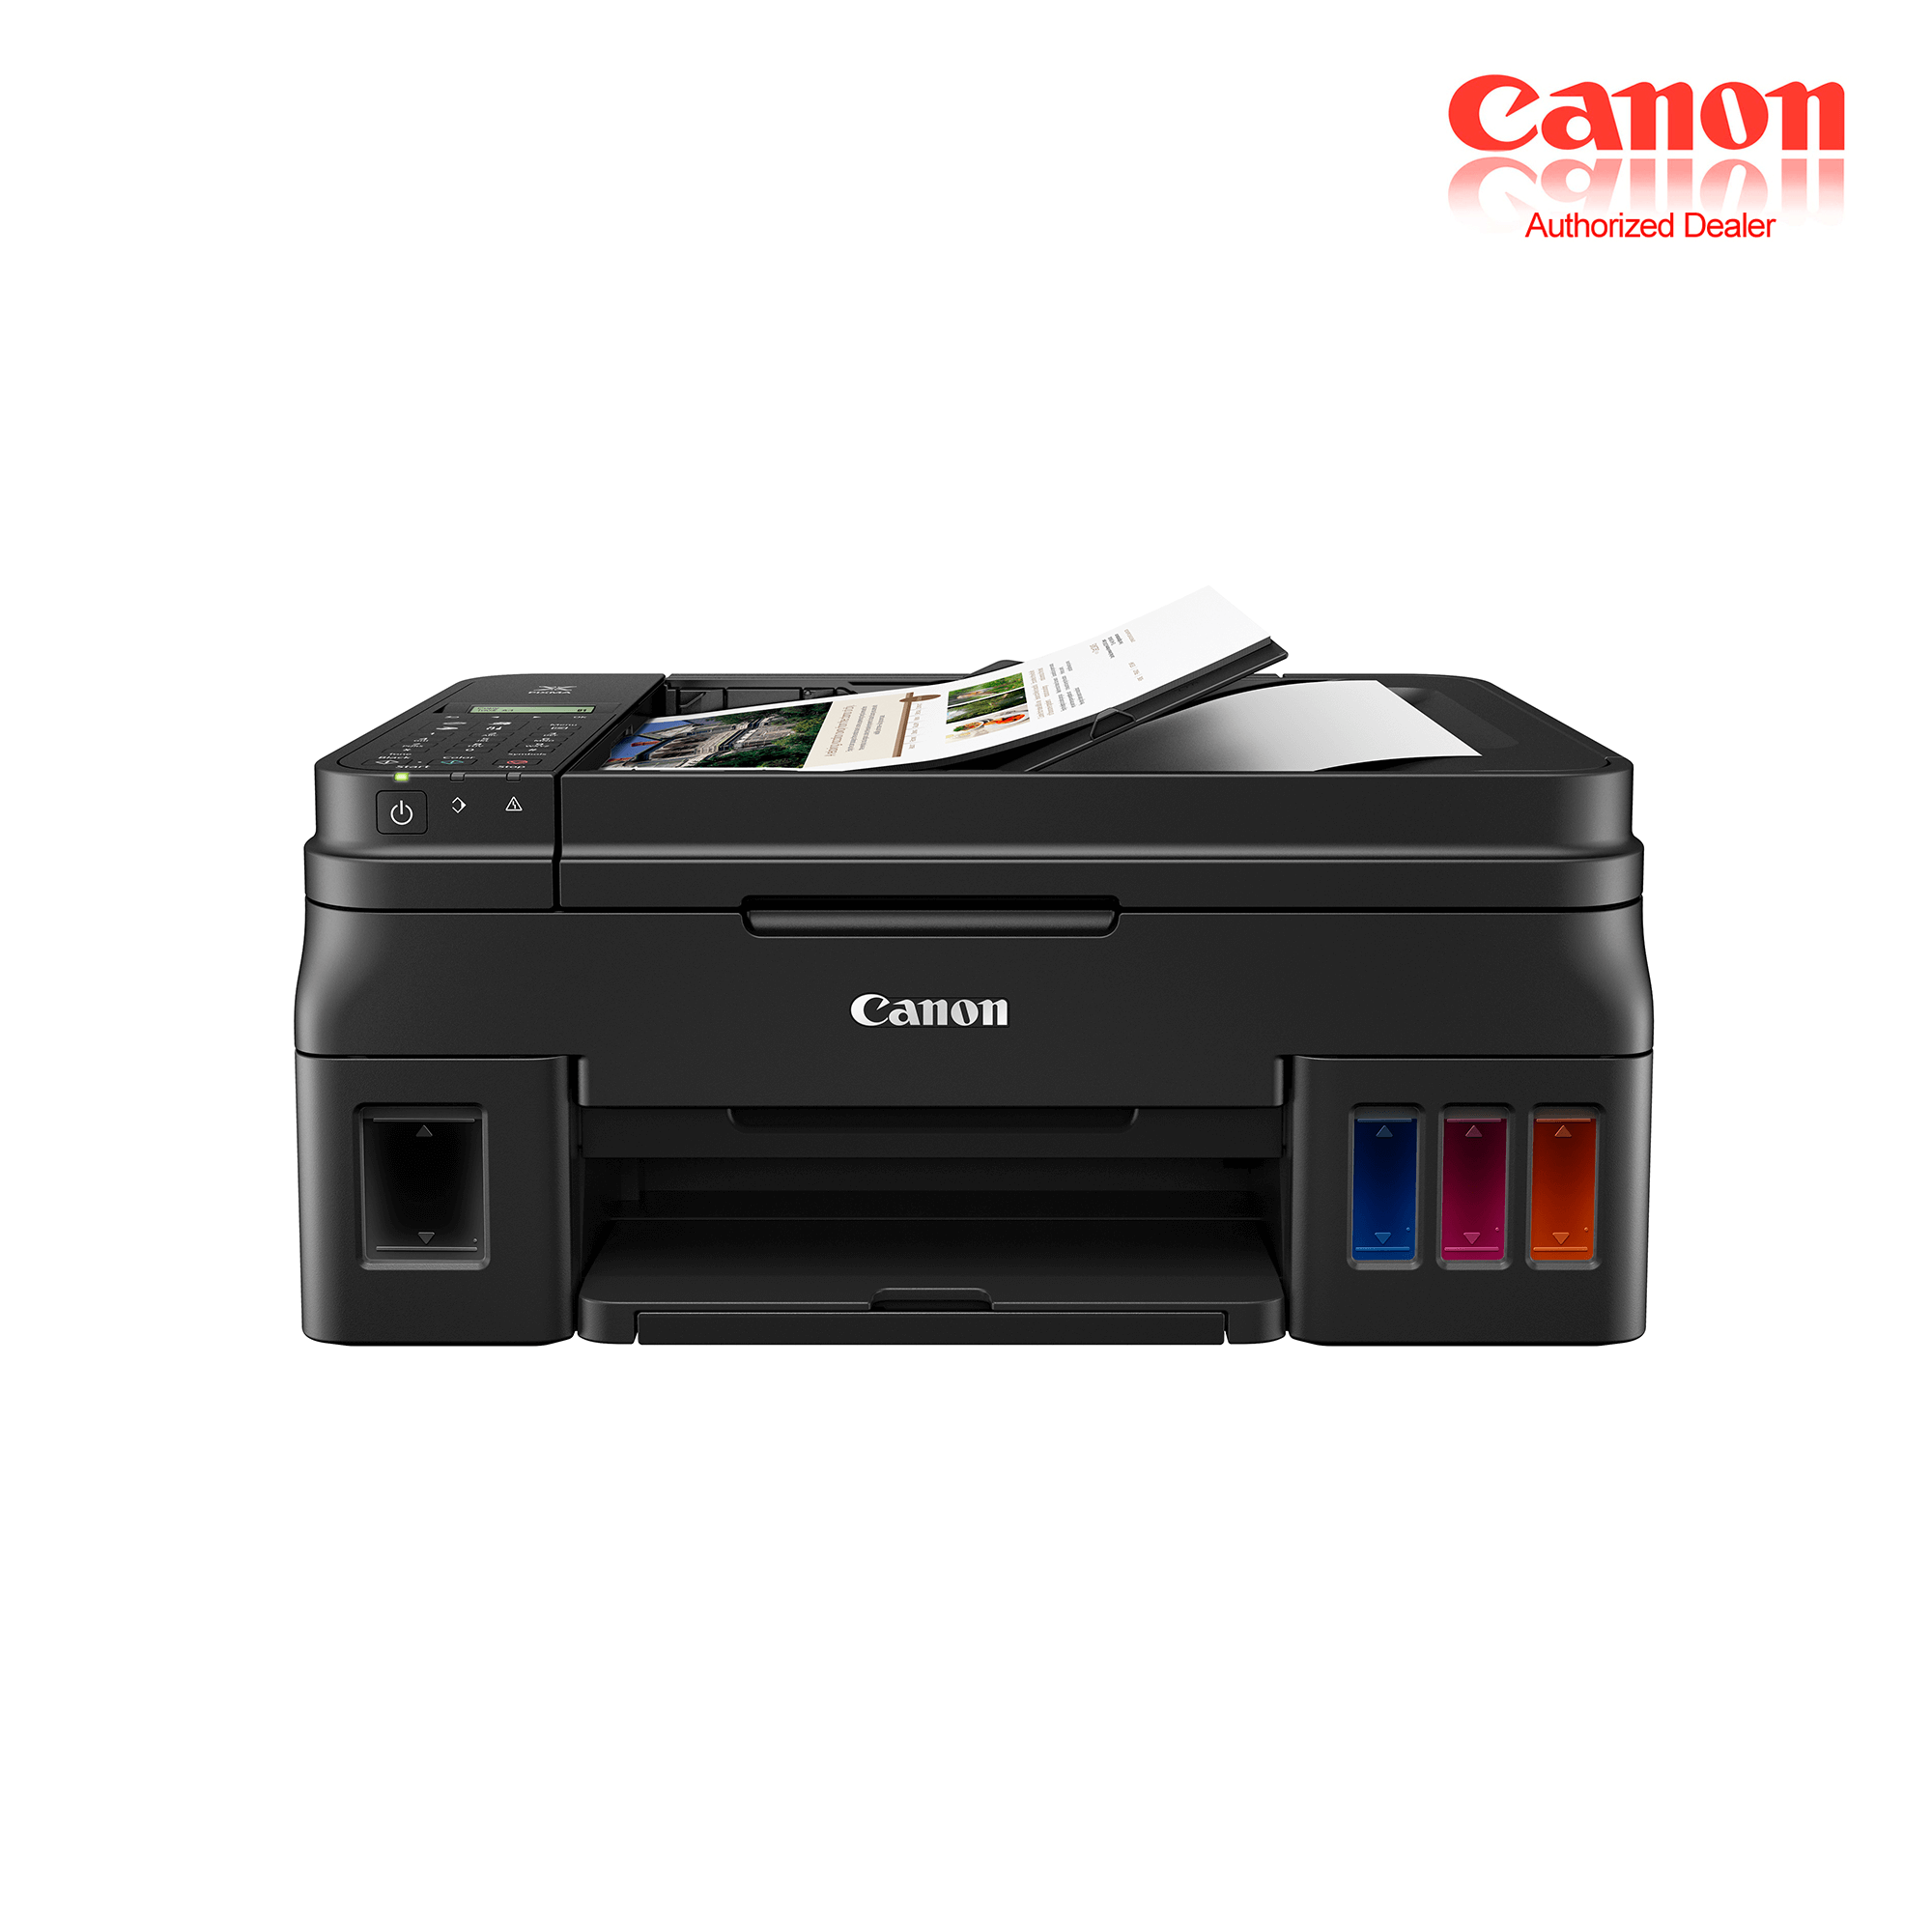 tub skrubbe Bryde igennem Canon PIXMA G4010 Wireless All-In-One Printer - Wink Printer